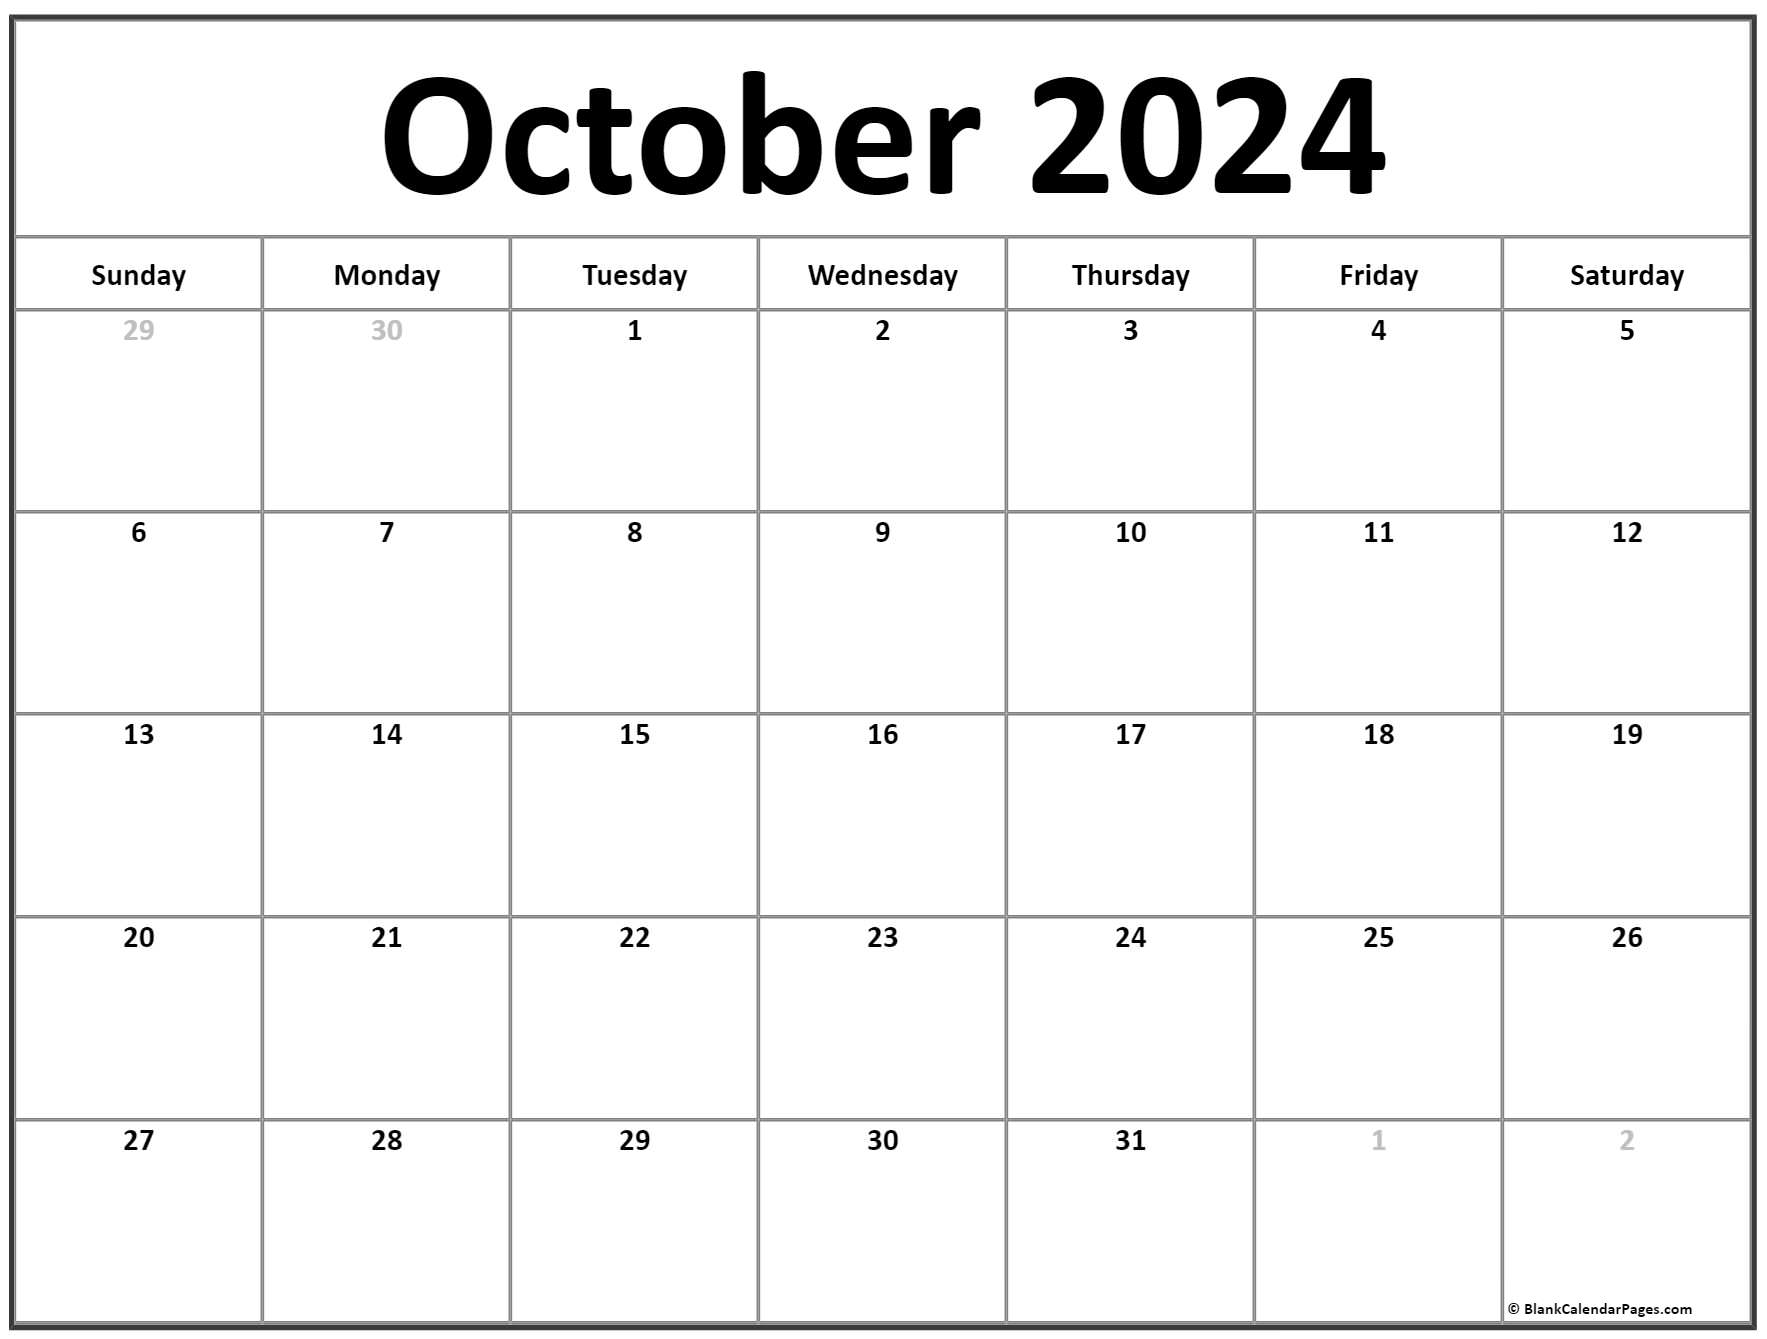 October 2021 calendar 